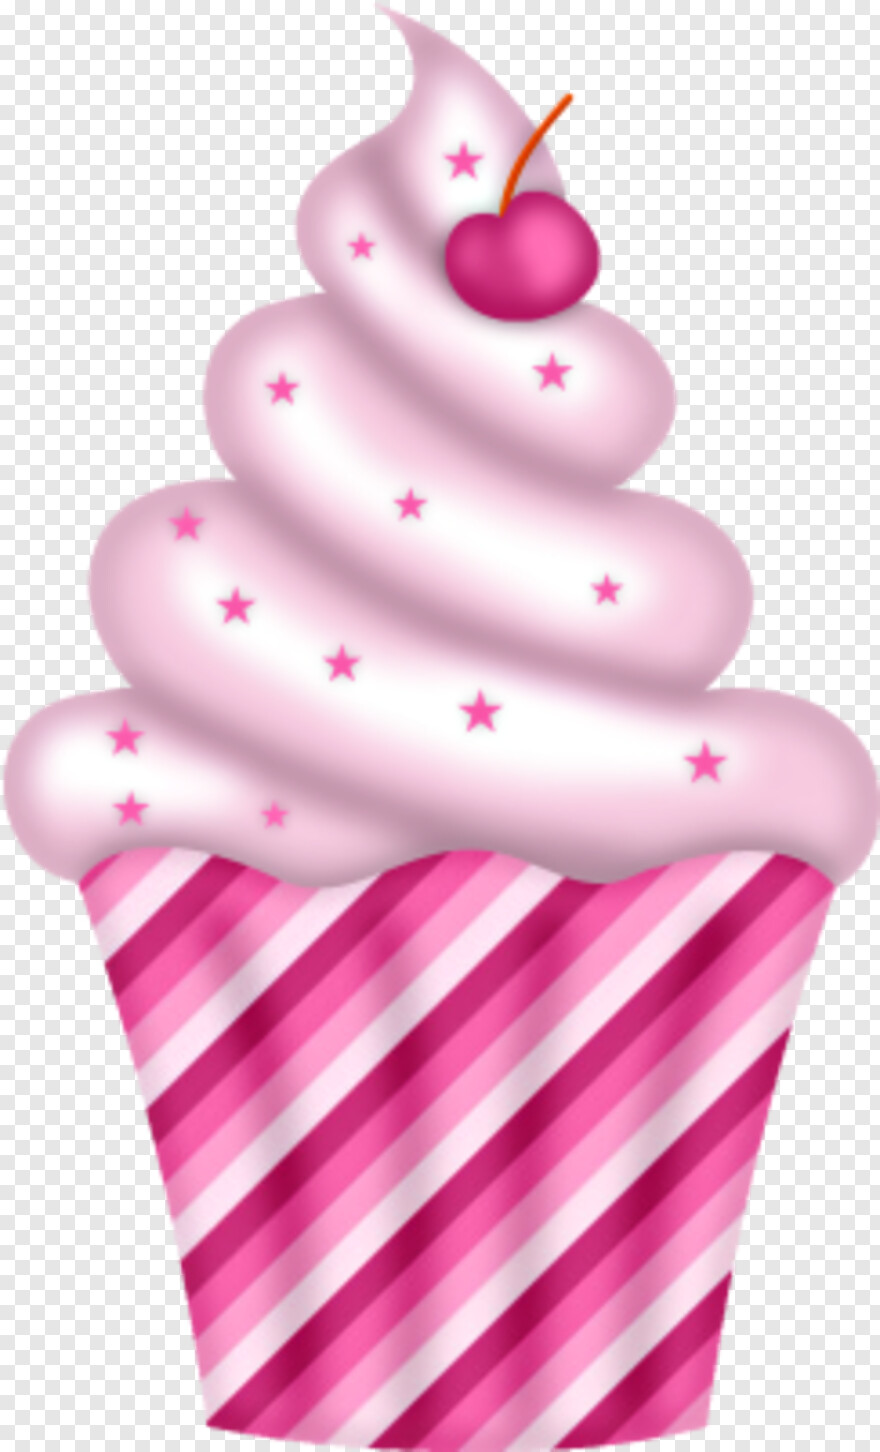 cupcake # 753135